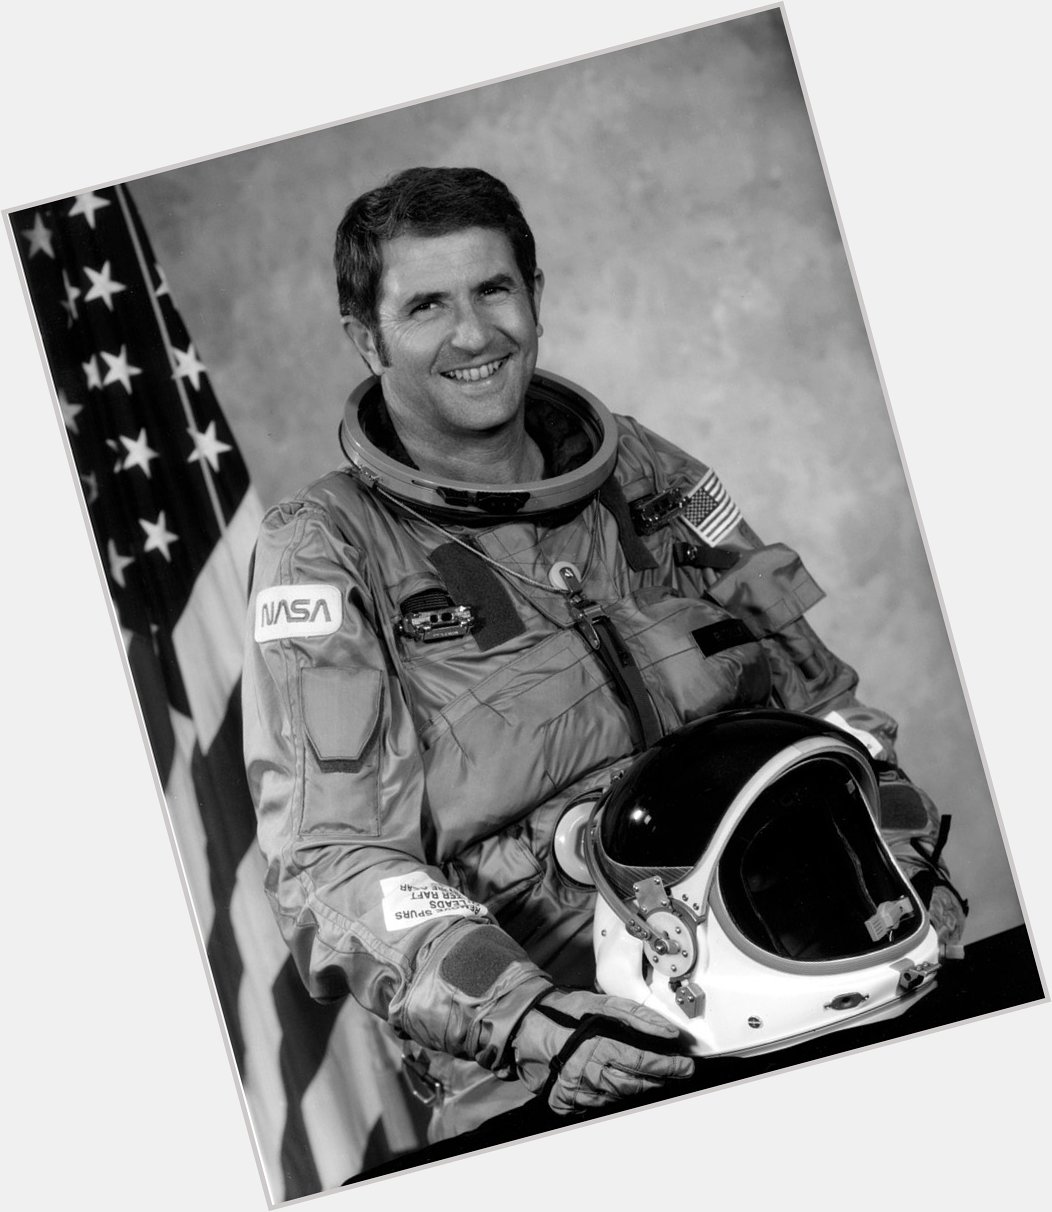 Happy birthday, space shuttle astronaut Richard Truly!  